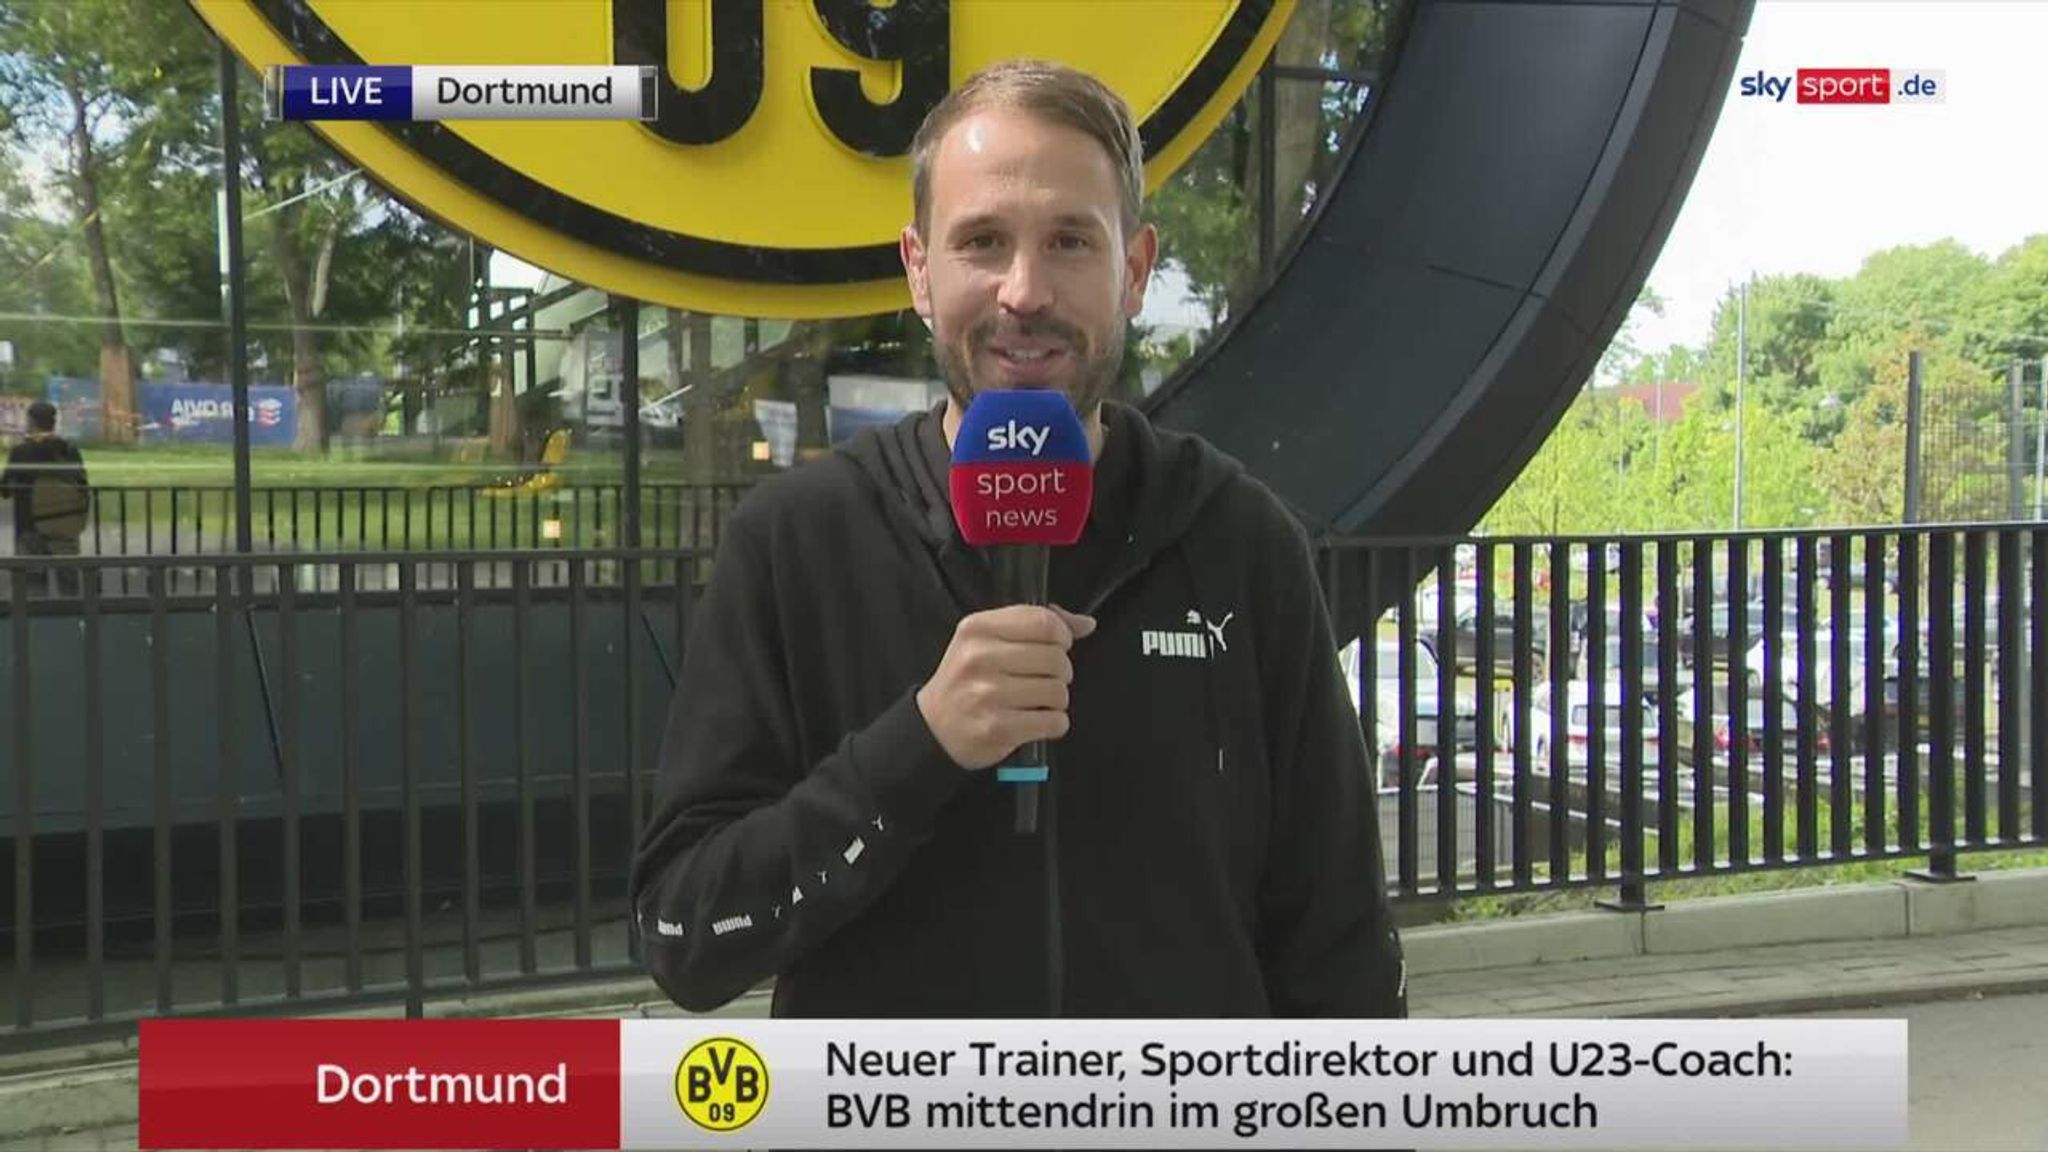 BVB Borussia Dortmund mittendrin im großen Umbruch Fußball News Sky Sport